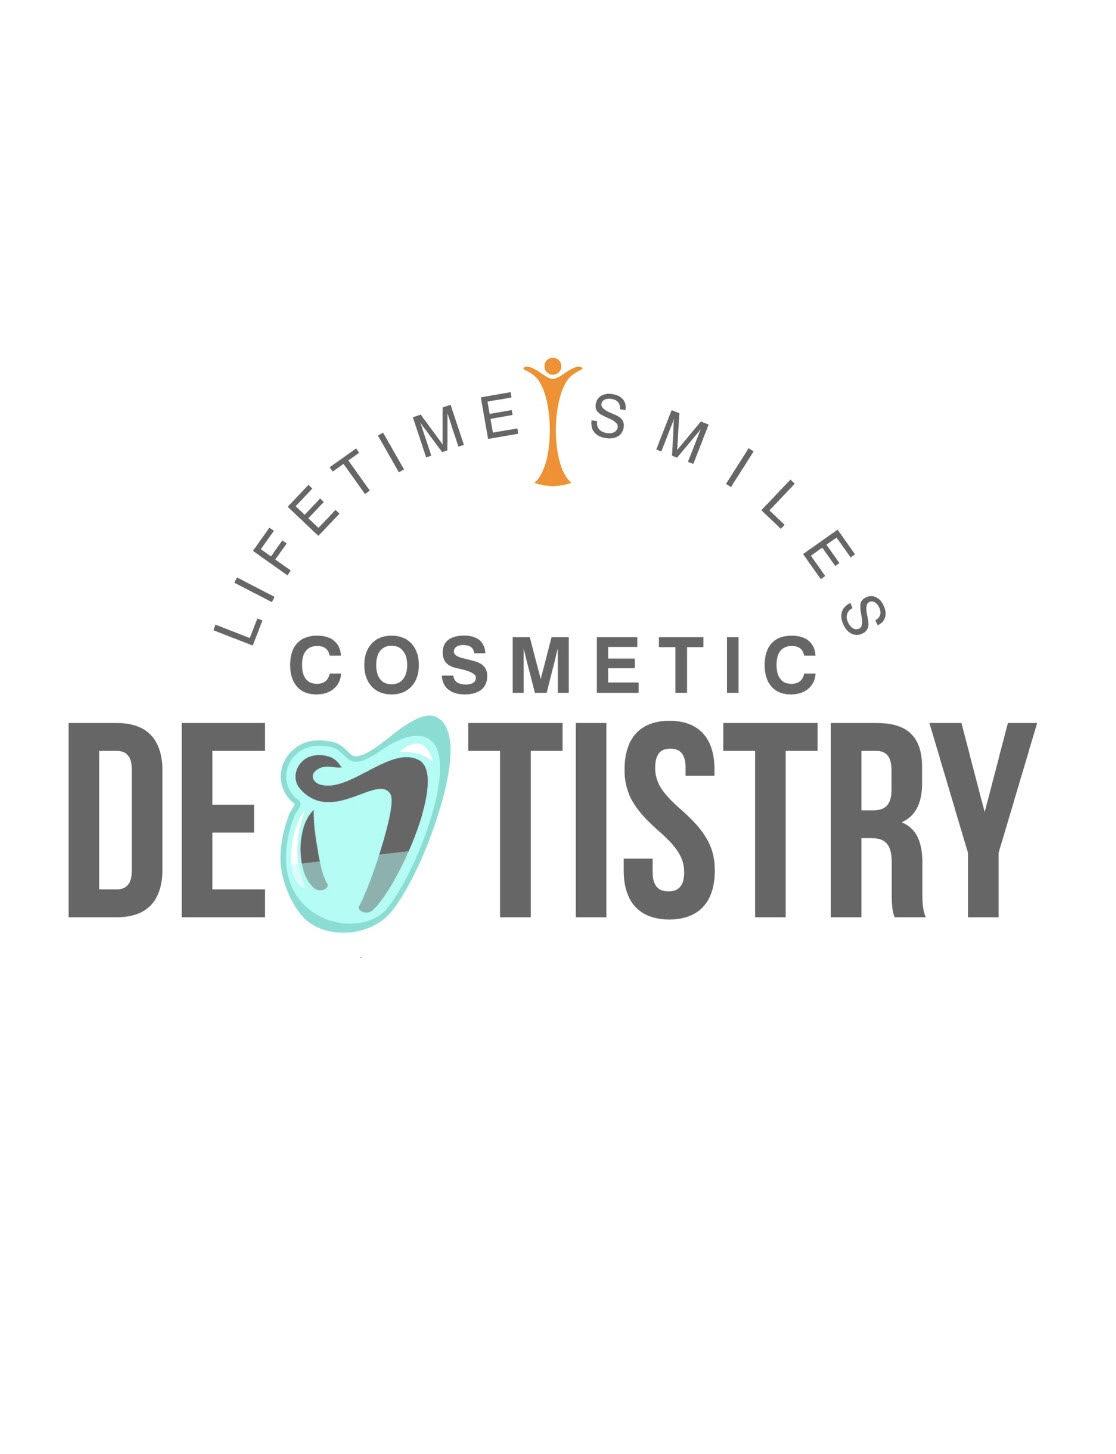 Austin Smiles Supporter - Synergy Plastic Surgery logo